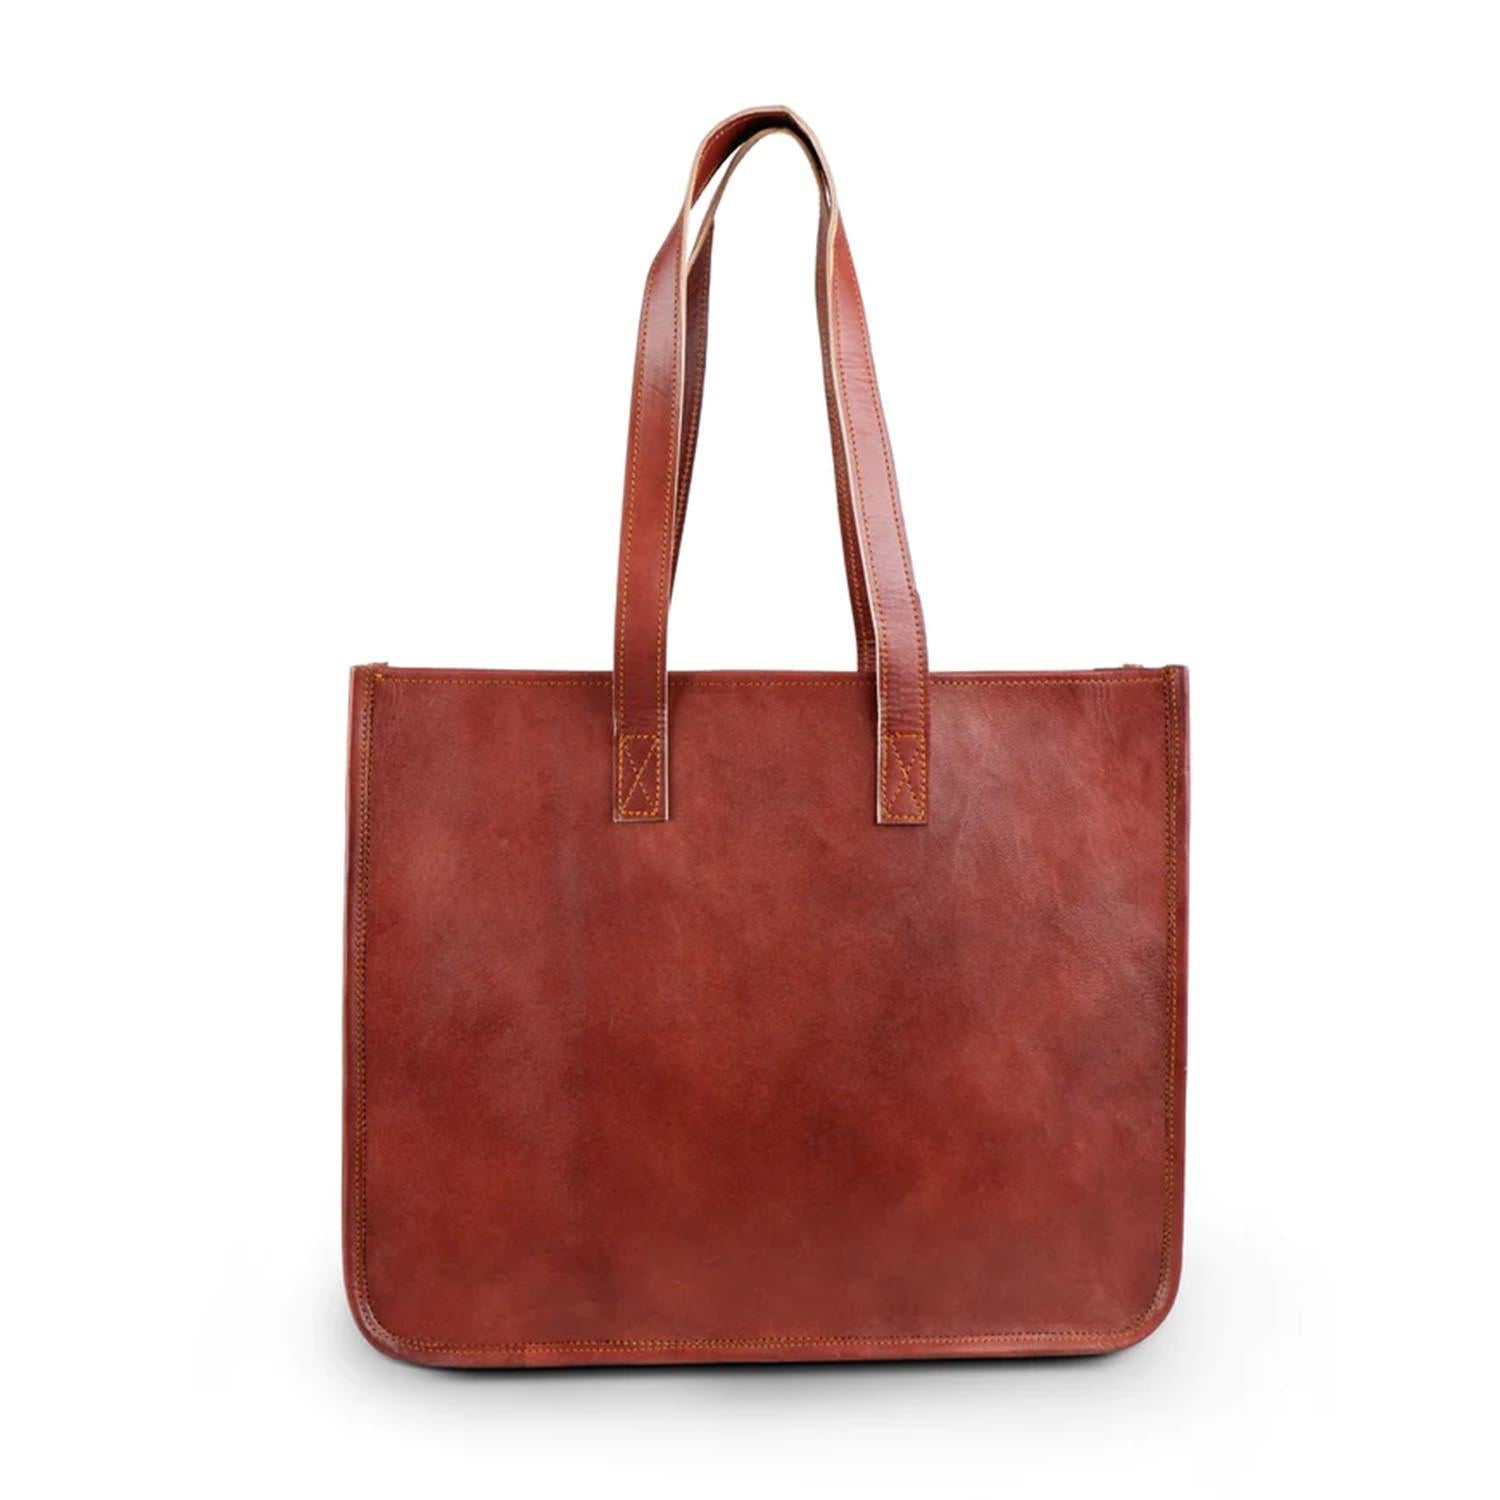 Trendy Look Athena Women’s Leather Tote Bag Vintage Genuine Brown Leathers